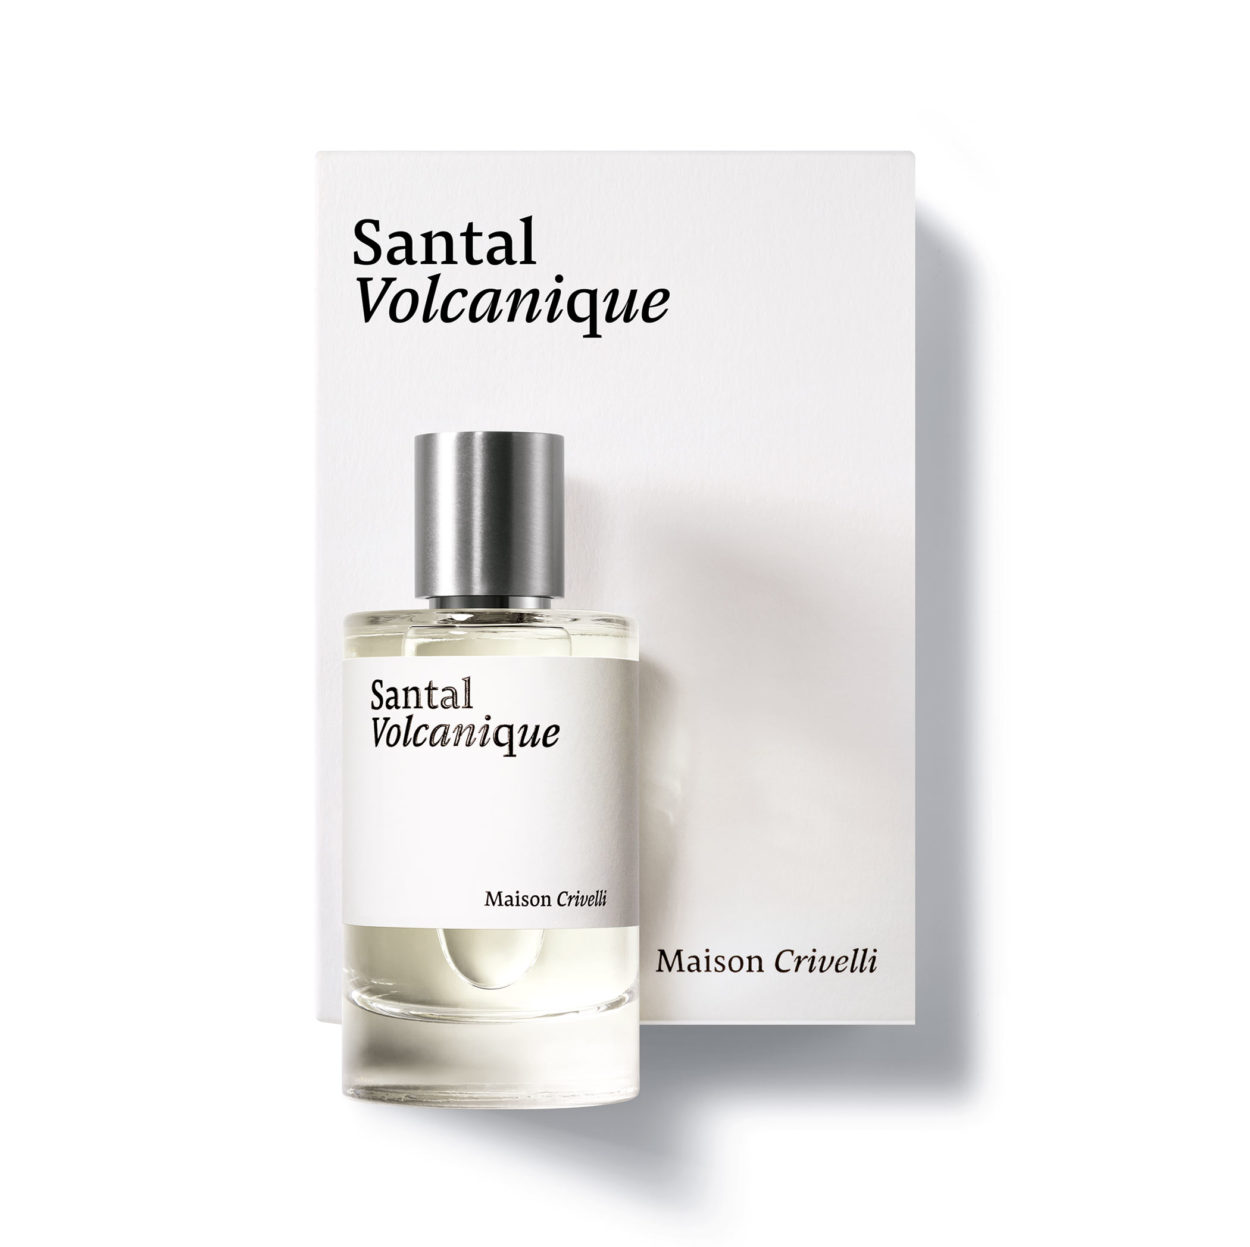 Santal Volcanique 100ml sandalwood spices ginger niche perfume - Maison Crivelli